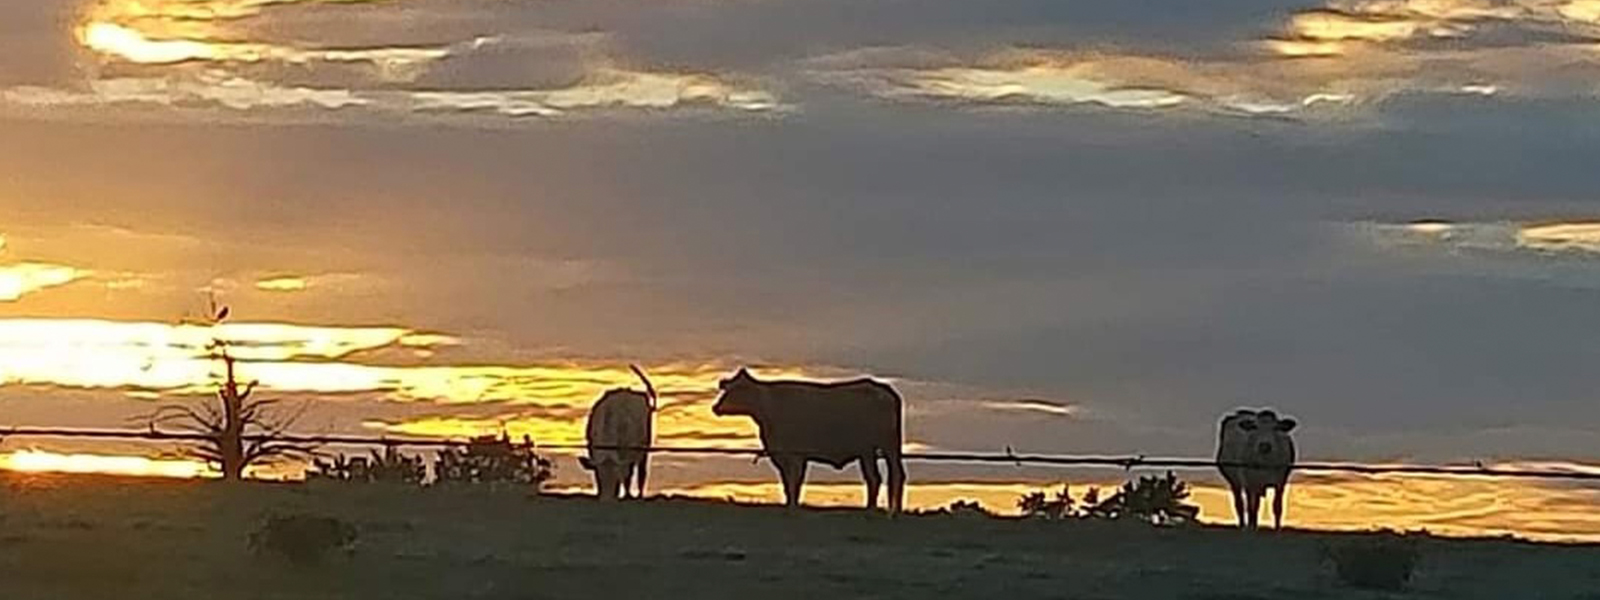 Cattle grazing in the green Premium Texas Beef pastures.